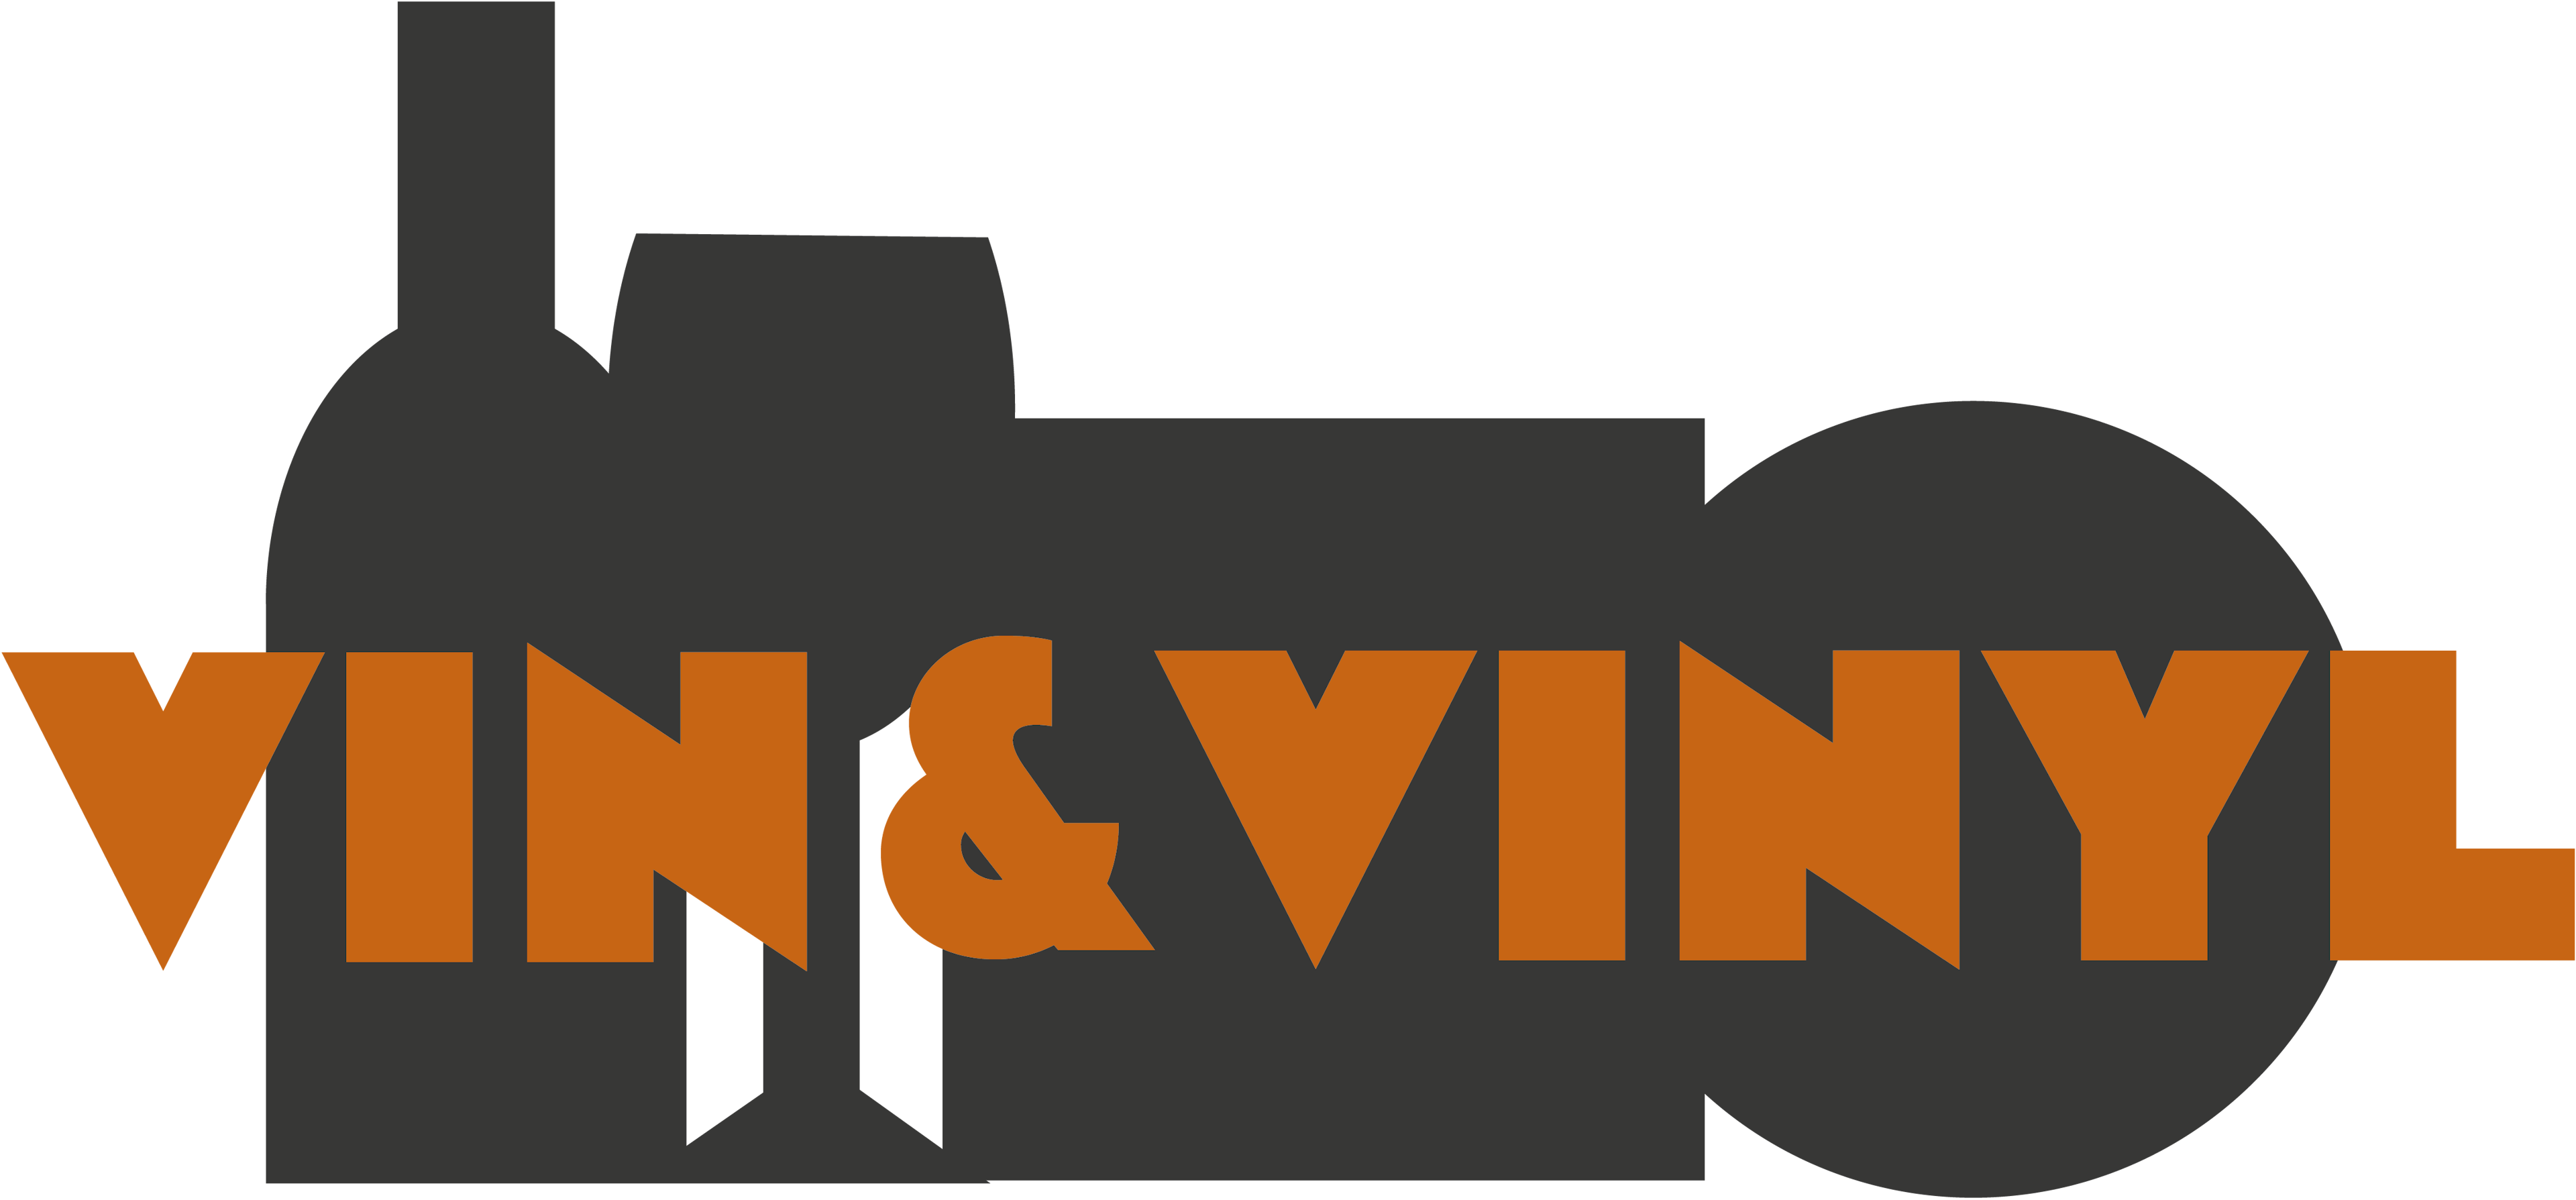 Vin & Vinyl logo